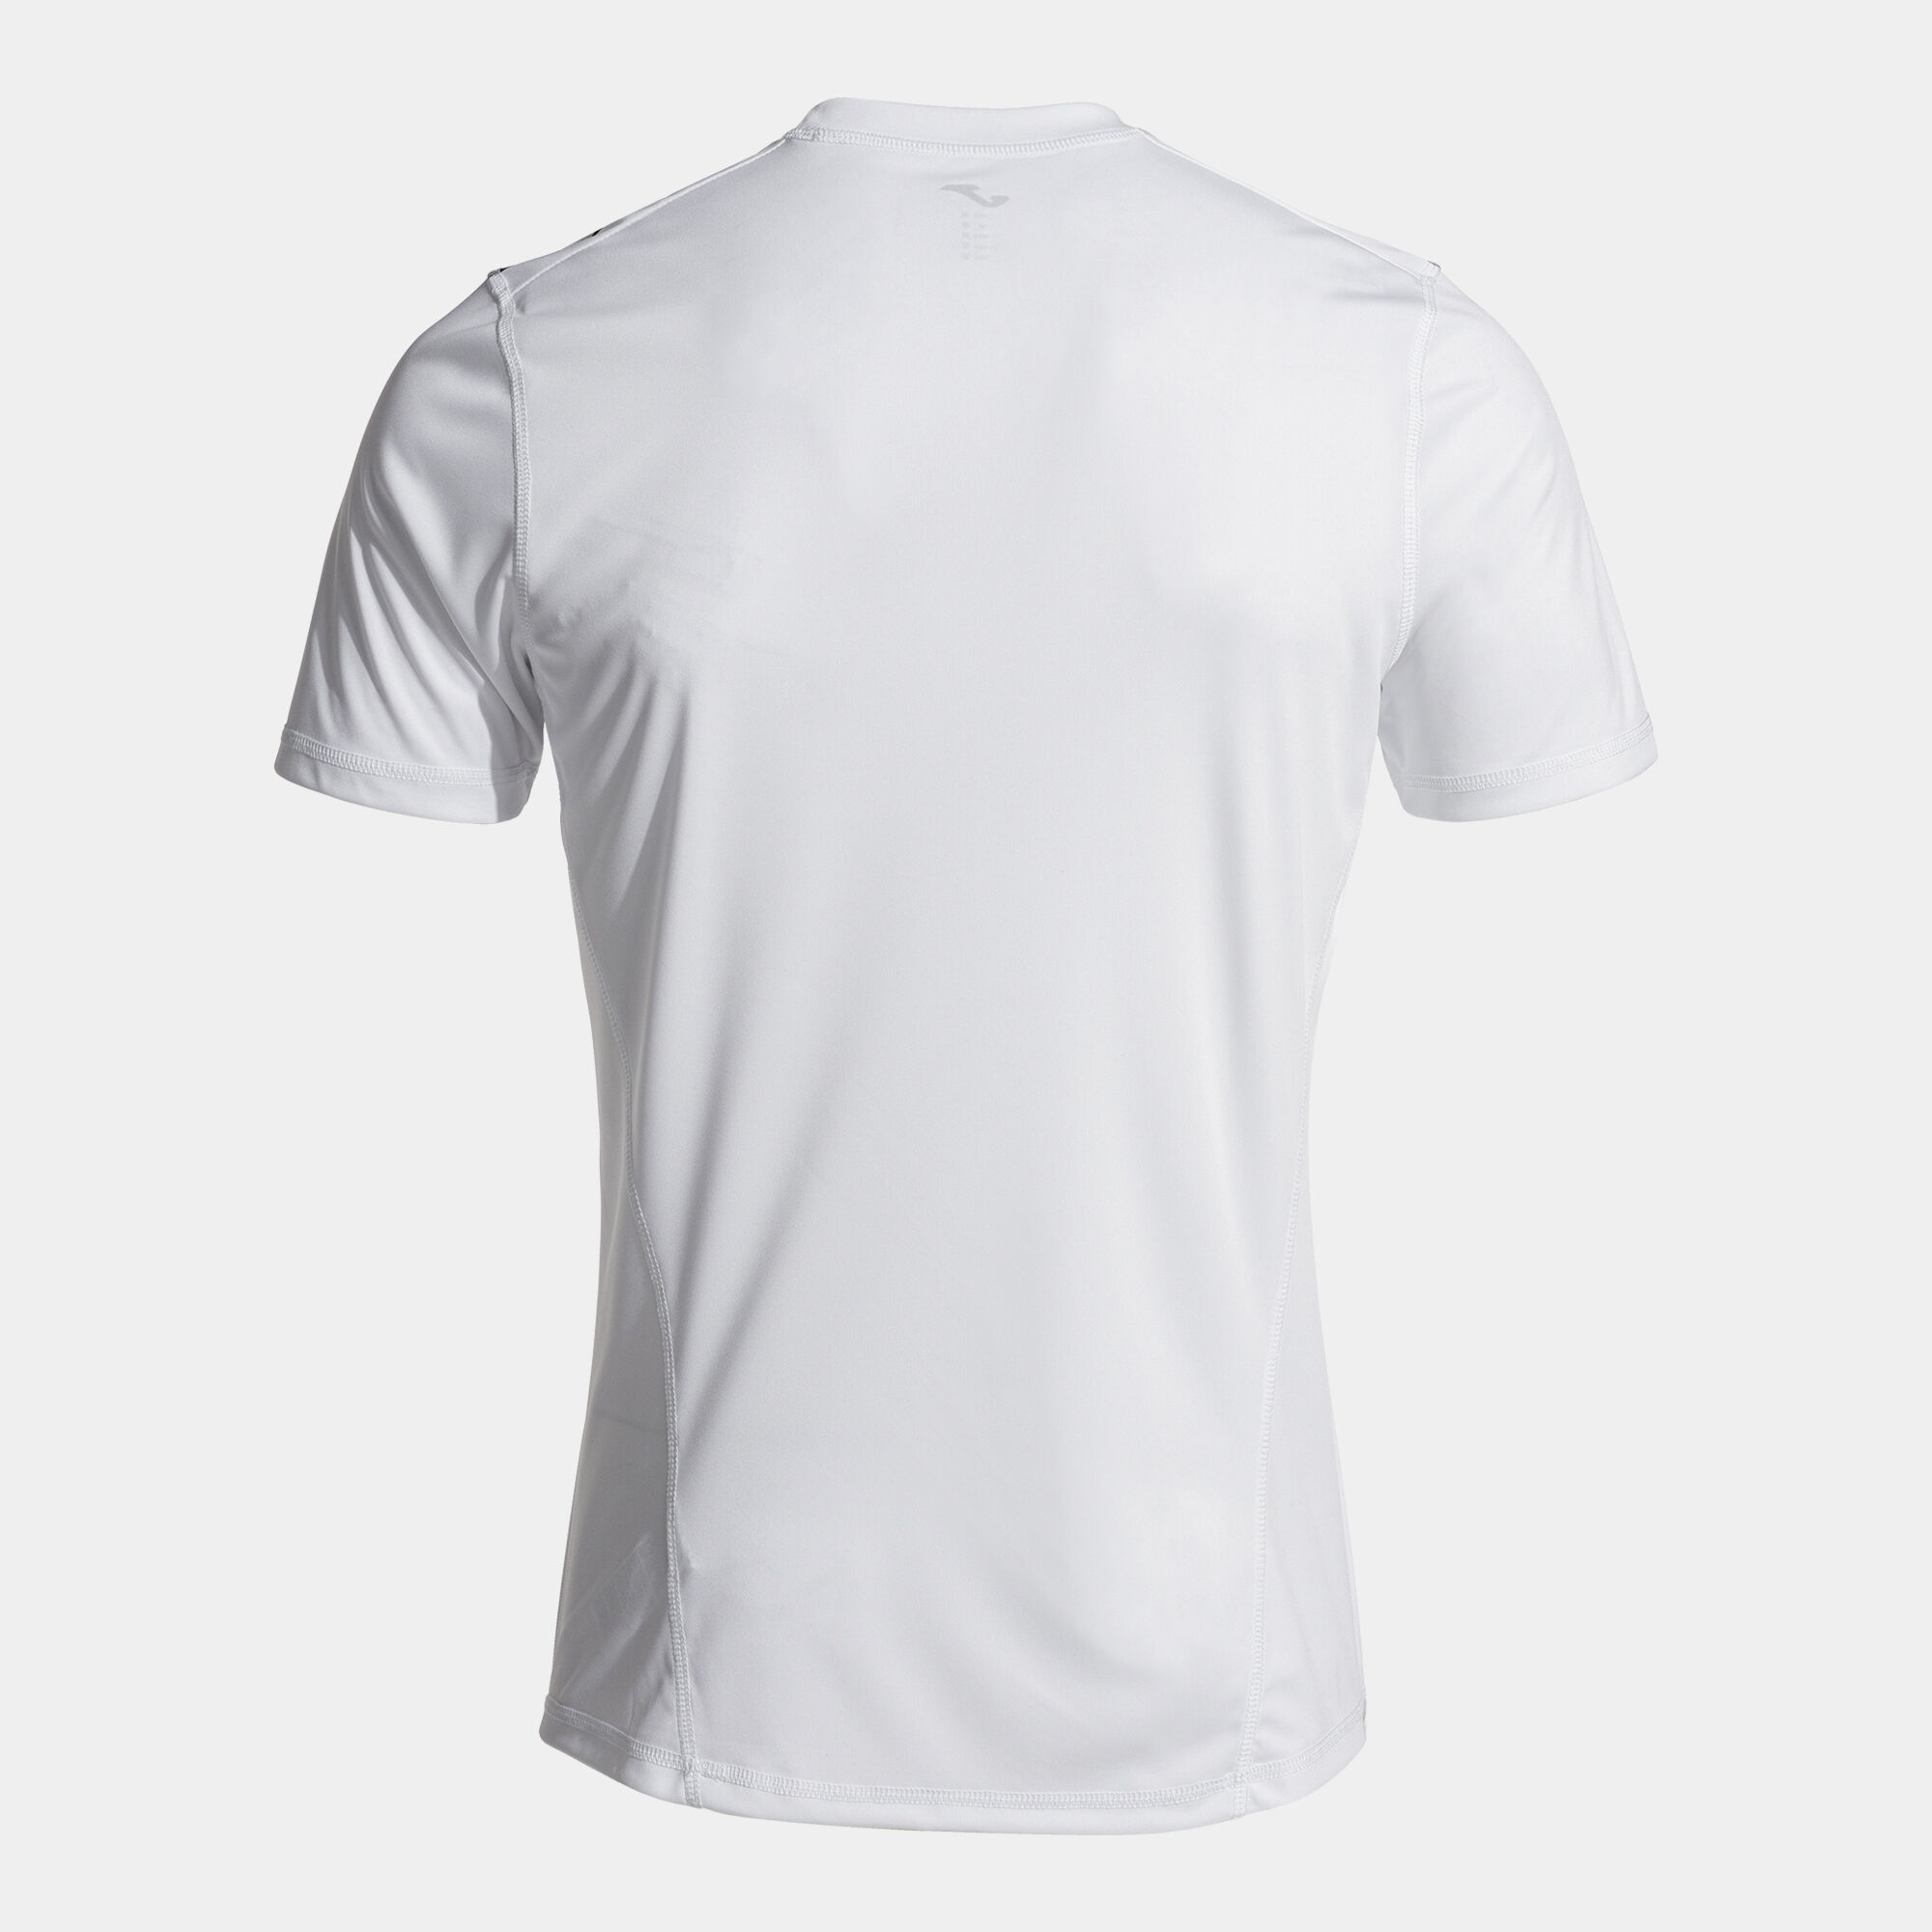 Camiseta manga corta hombre Olimpiada handball blanco